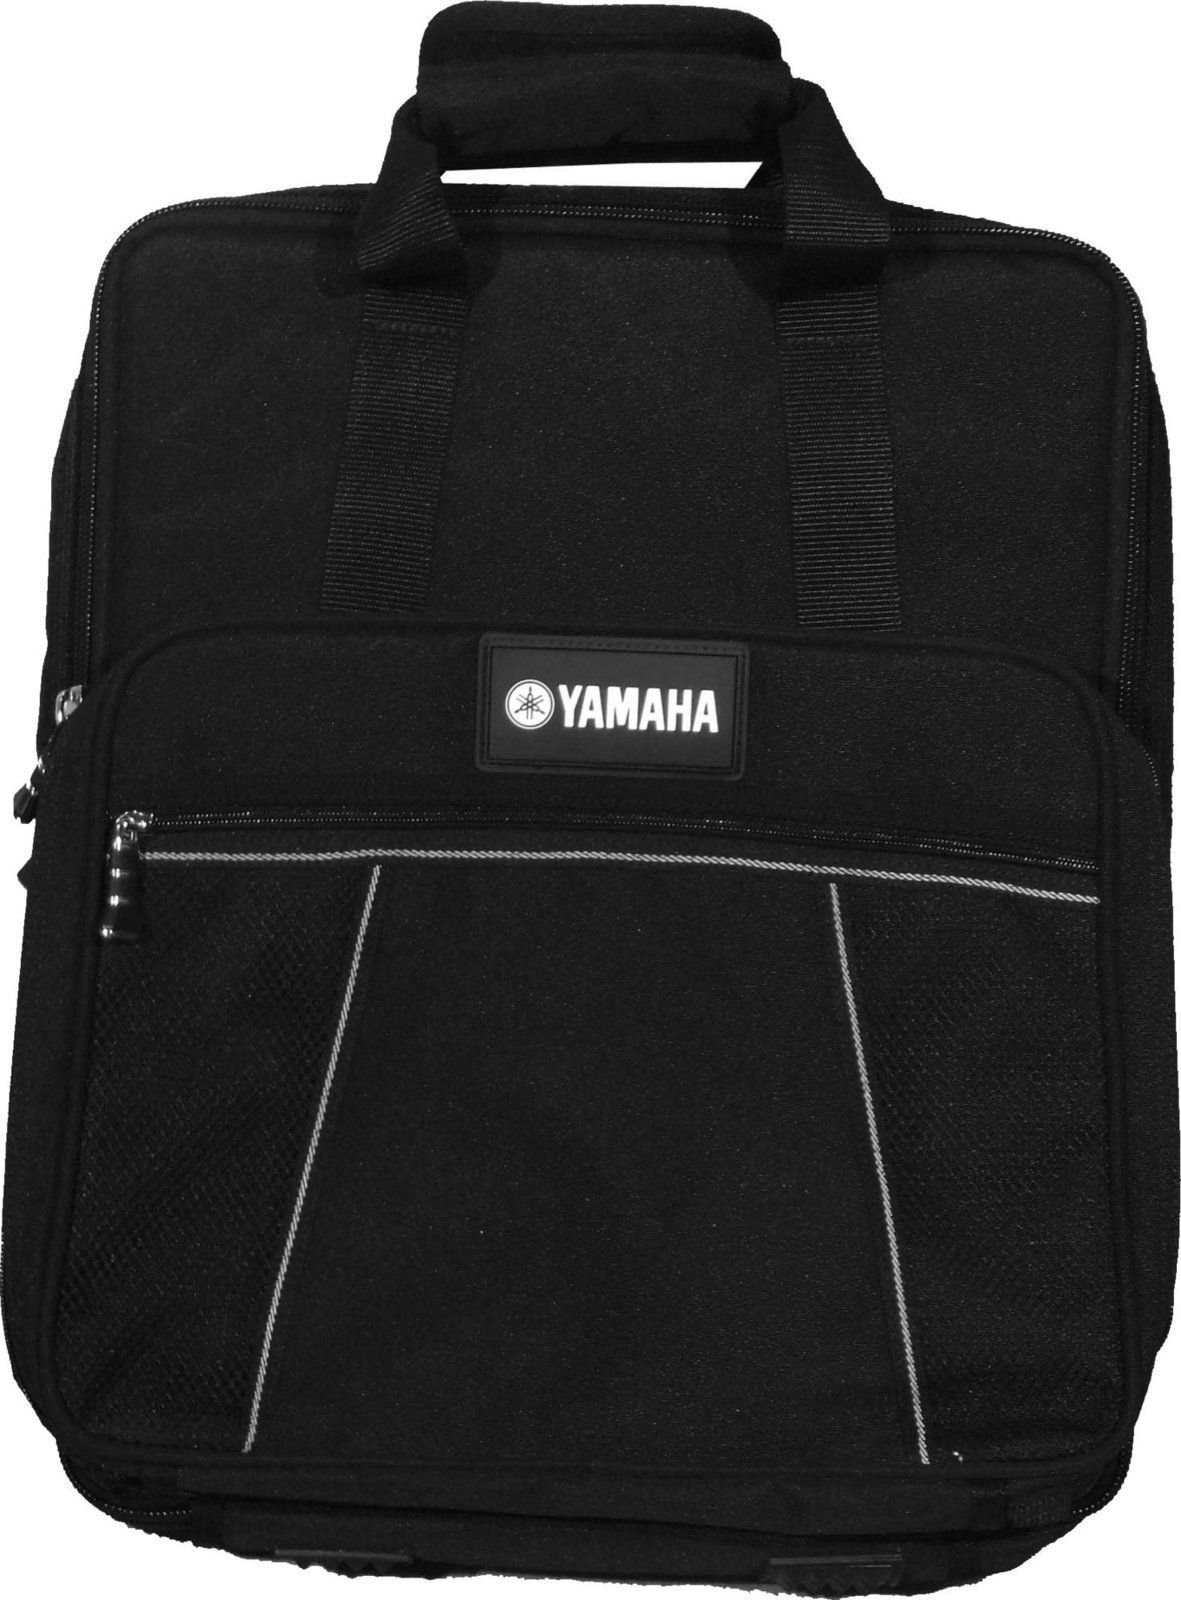 Hoes/koffer voor geluidsapparatuur Yamaha SCMG12